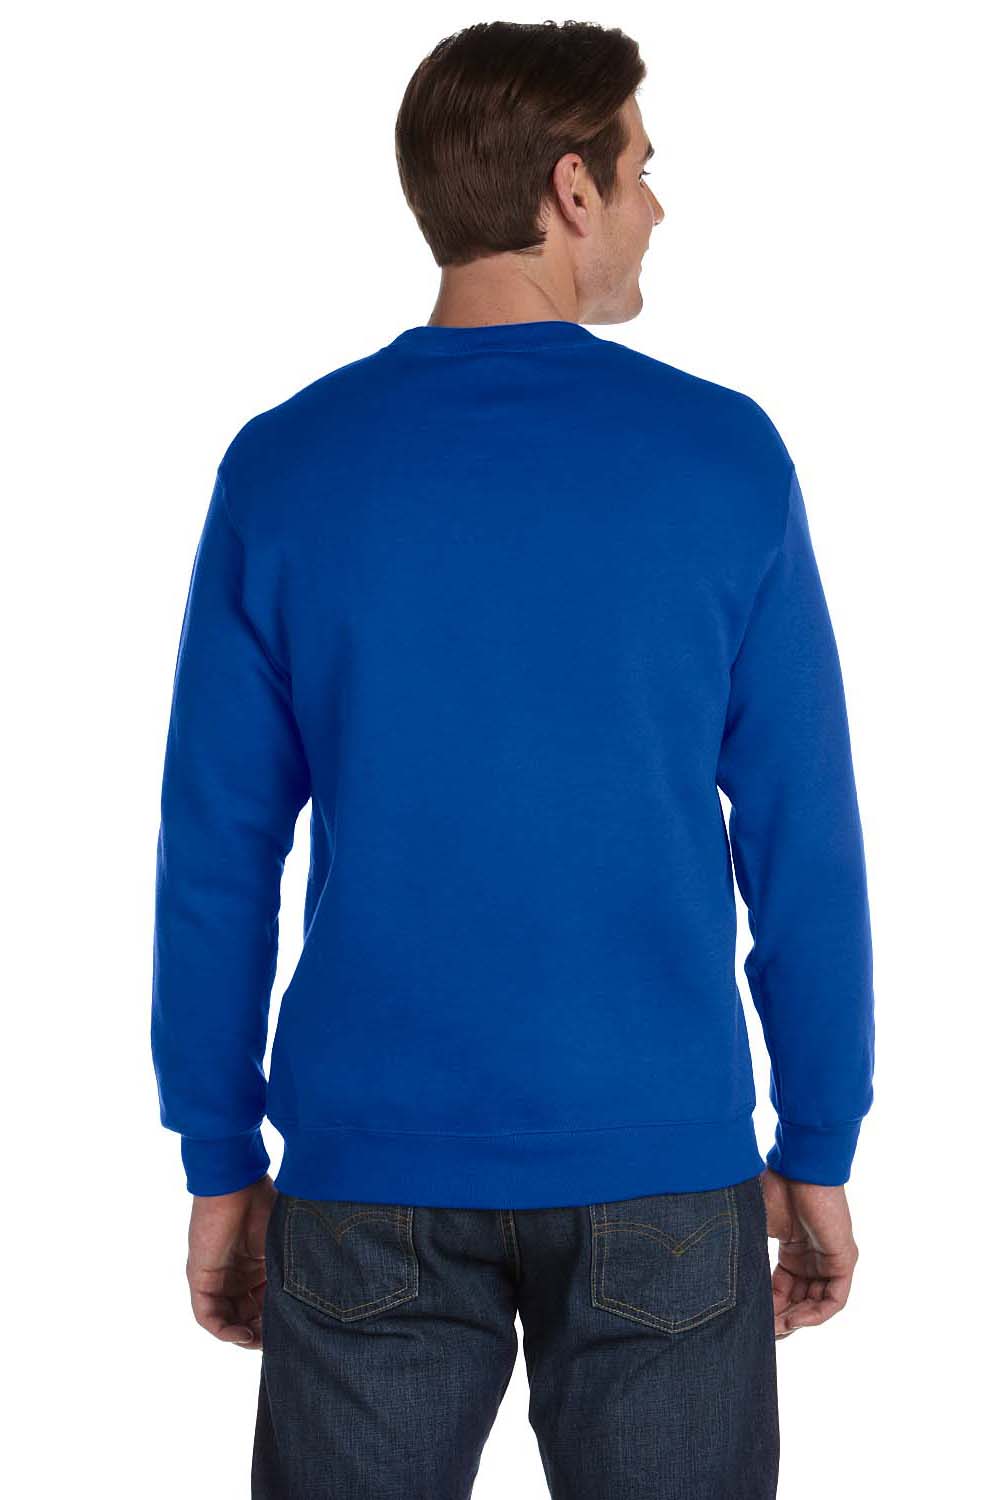 Gildan G120 Mens DryBlend Moisture Wicking Fleece Crewneck Sweatshirt Royal Blue Back